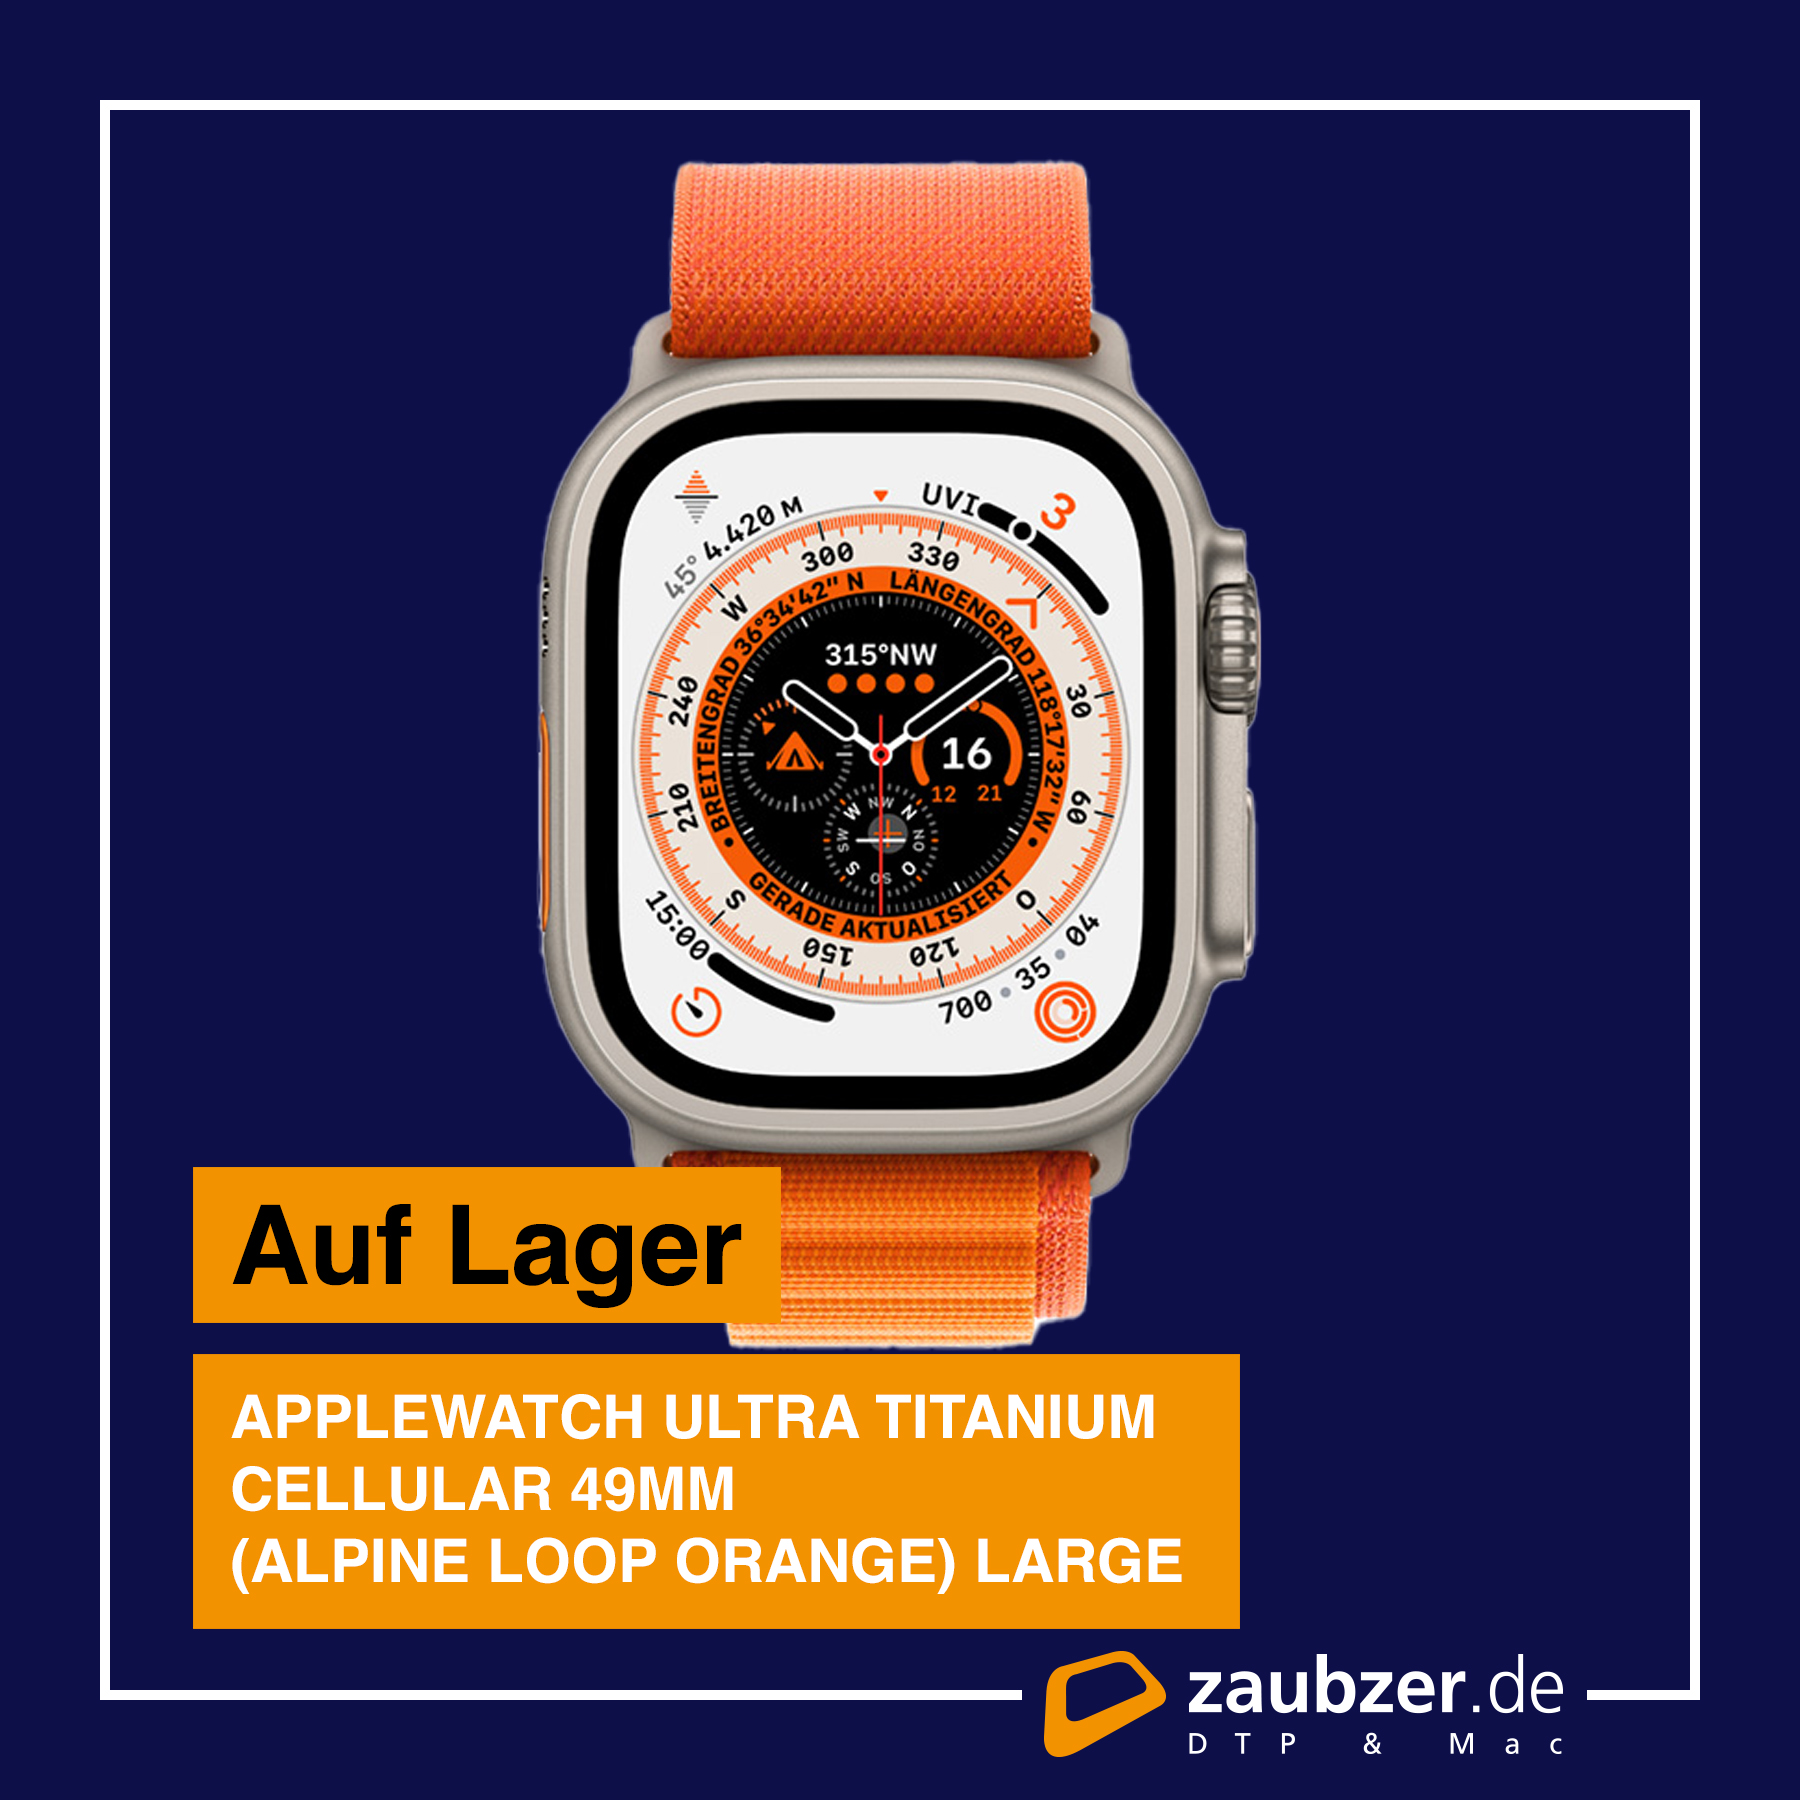 zaubzer.de - AppleWatch Ultra Titanium Cellular 49mm (Alpine Loop orange) Large